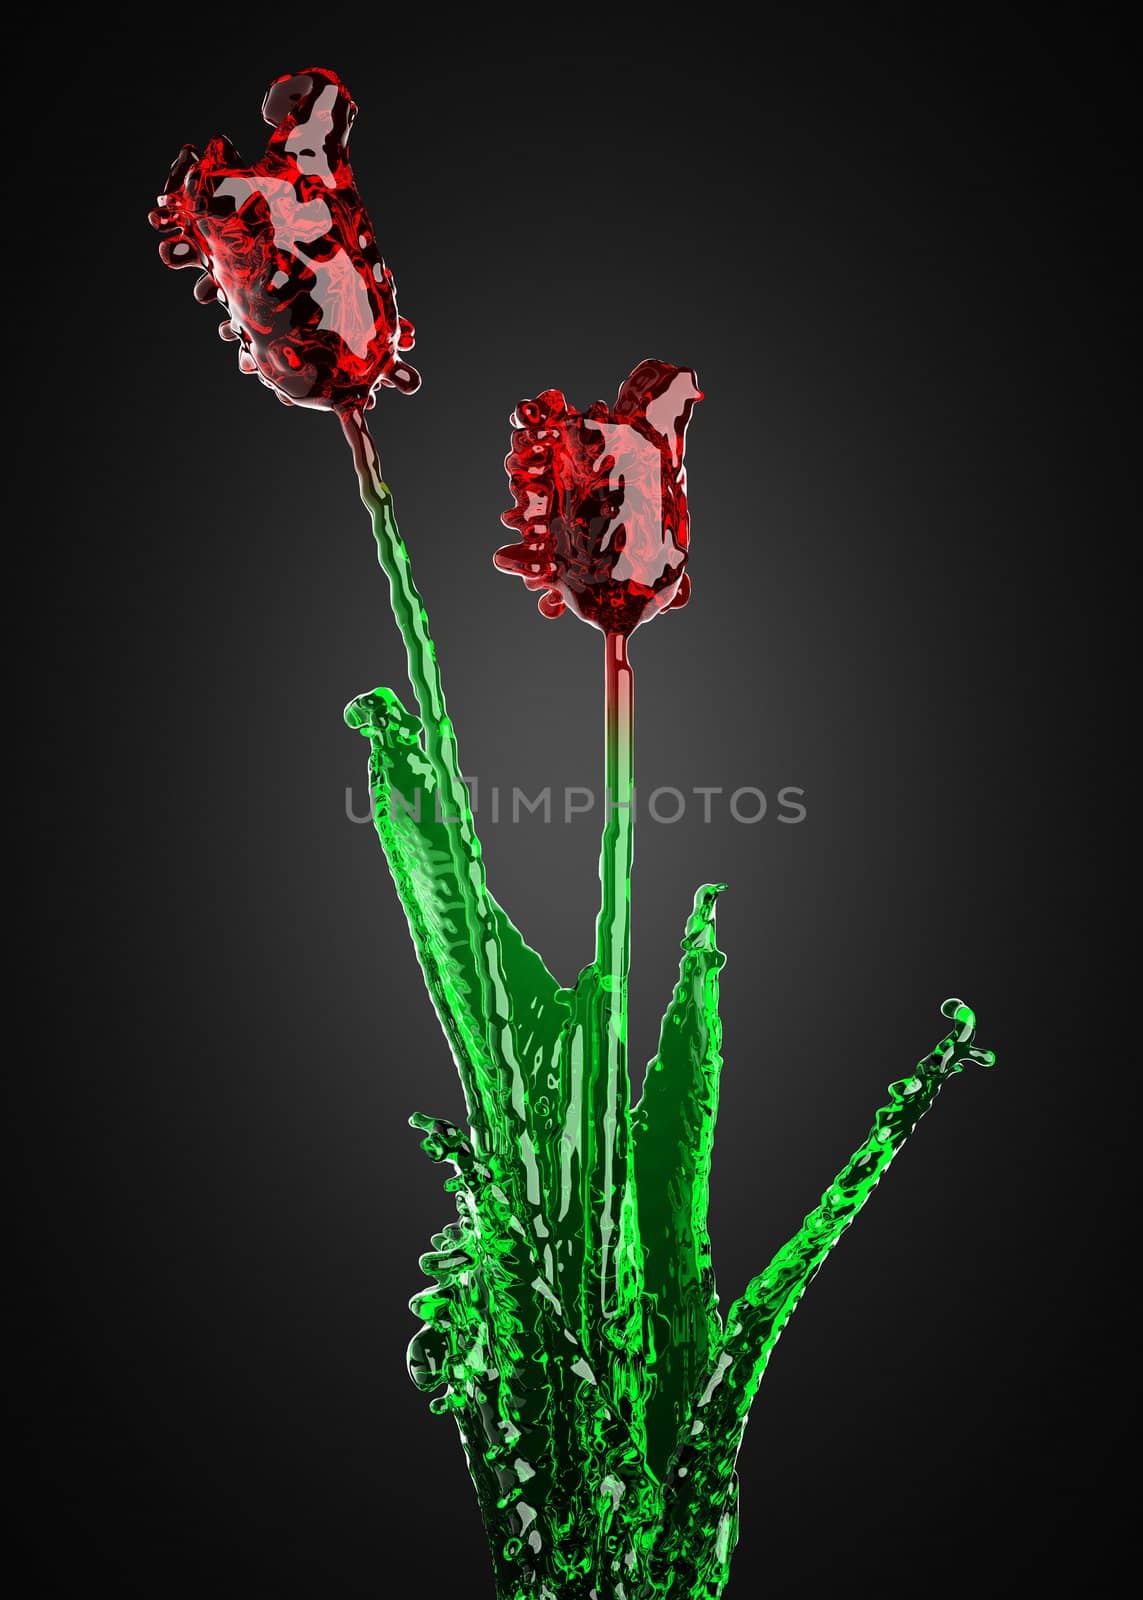 Flower of glass by videodoctor